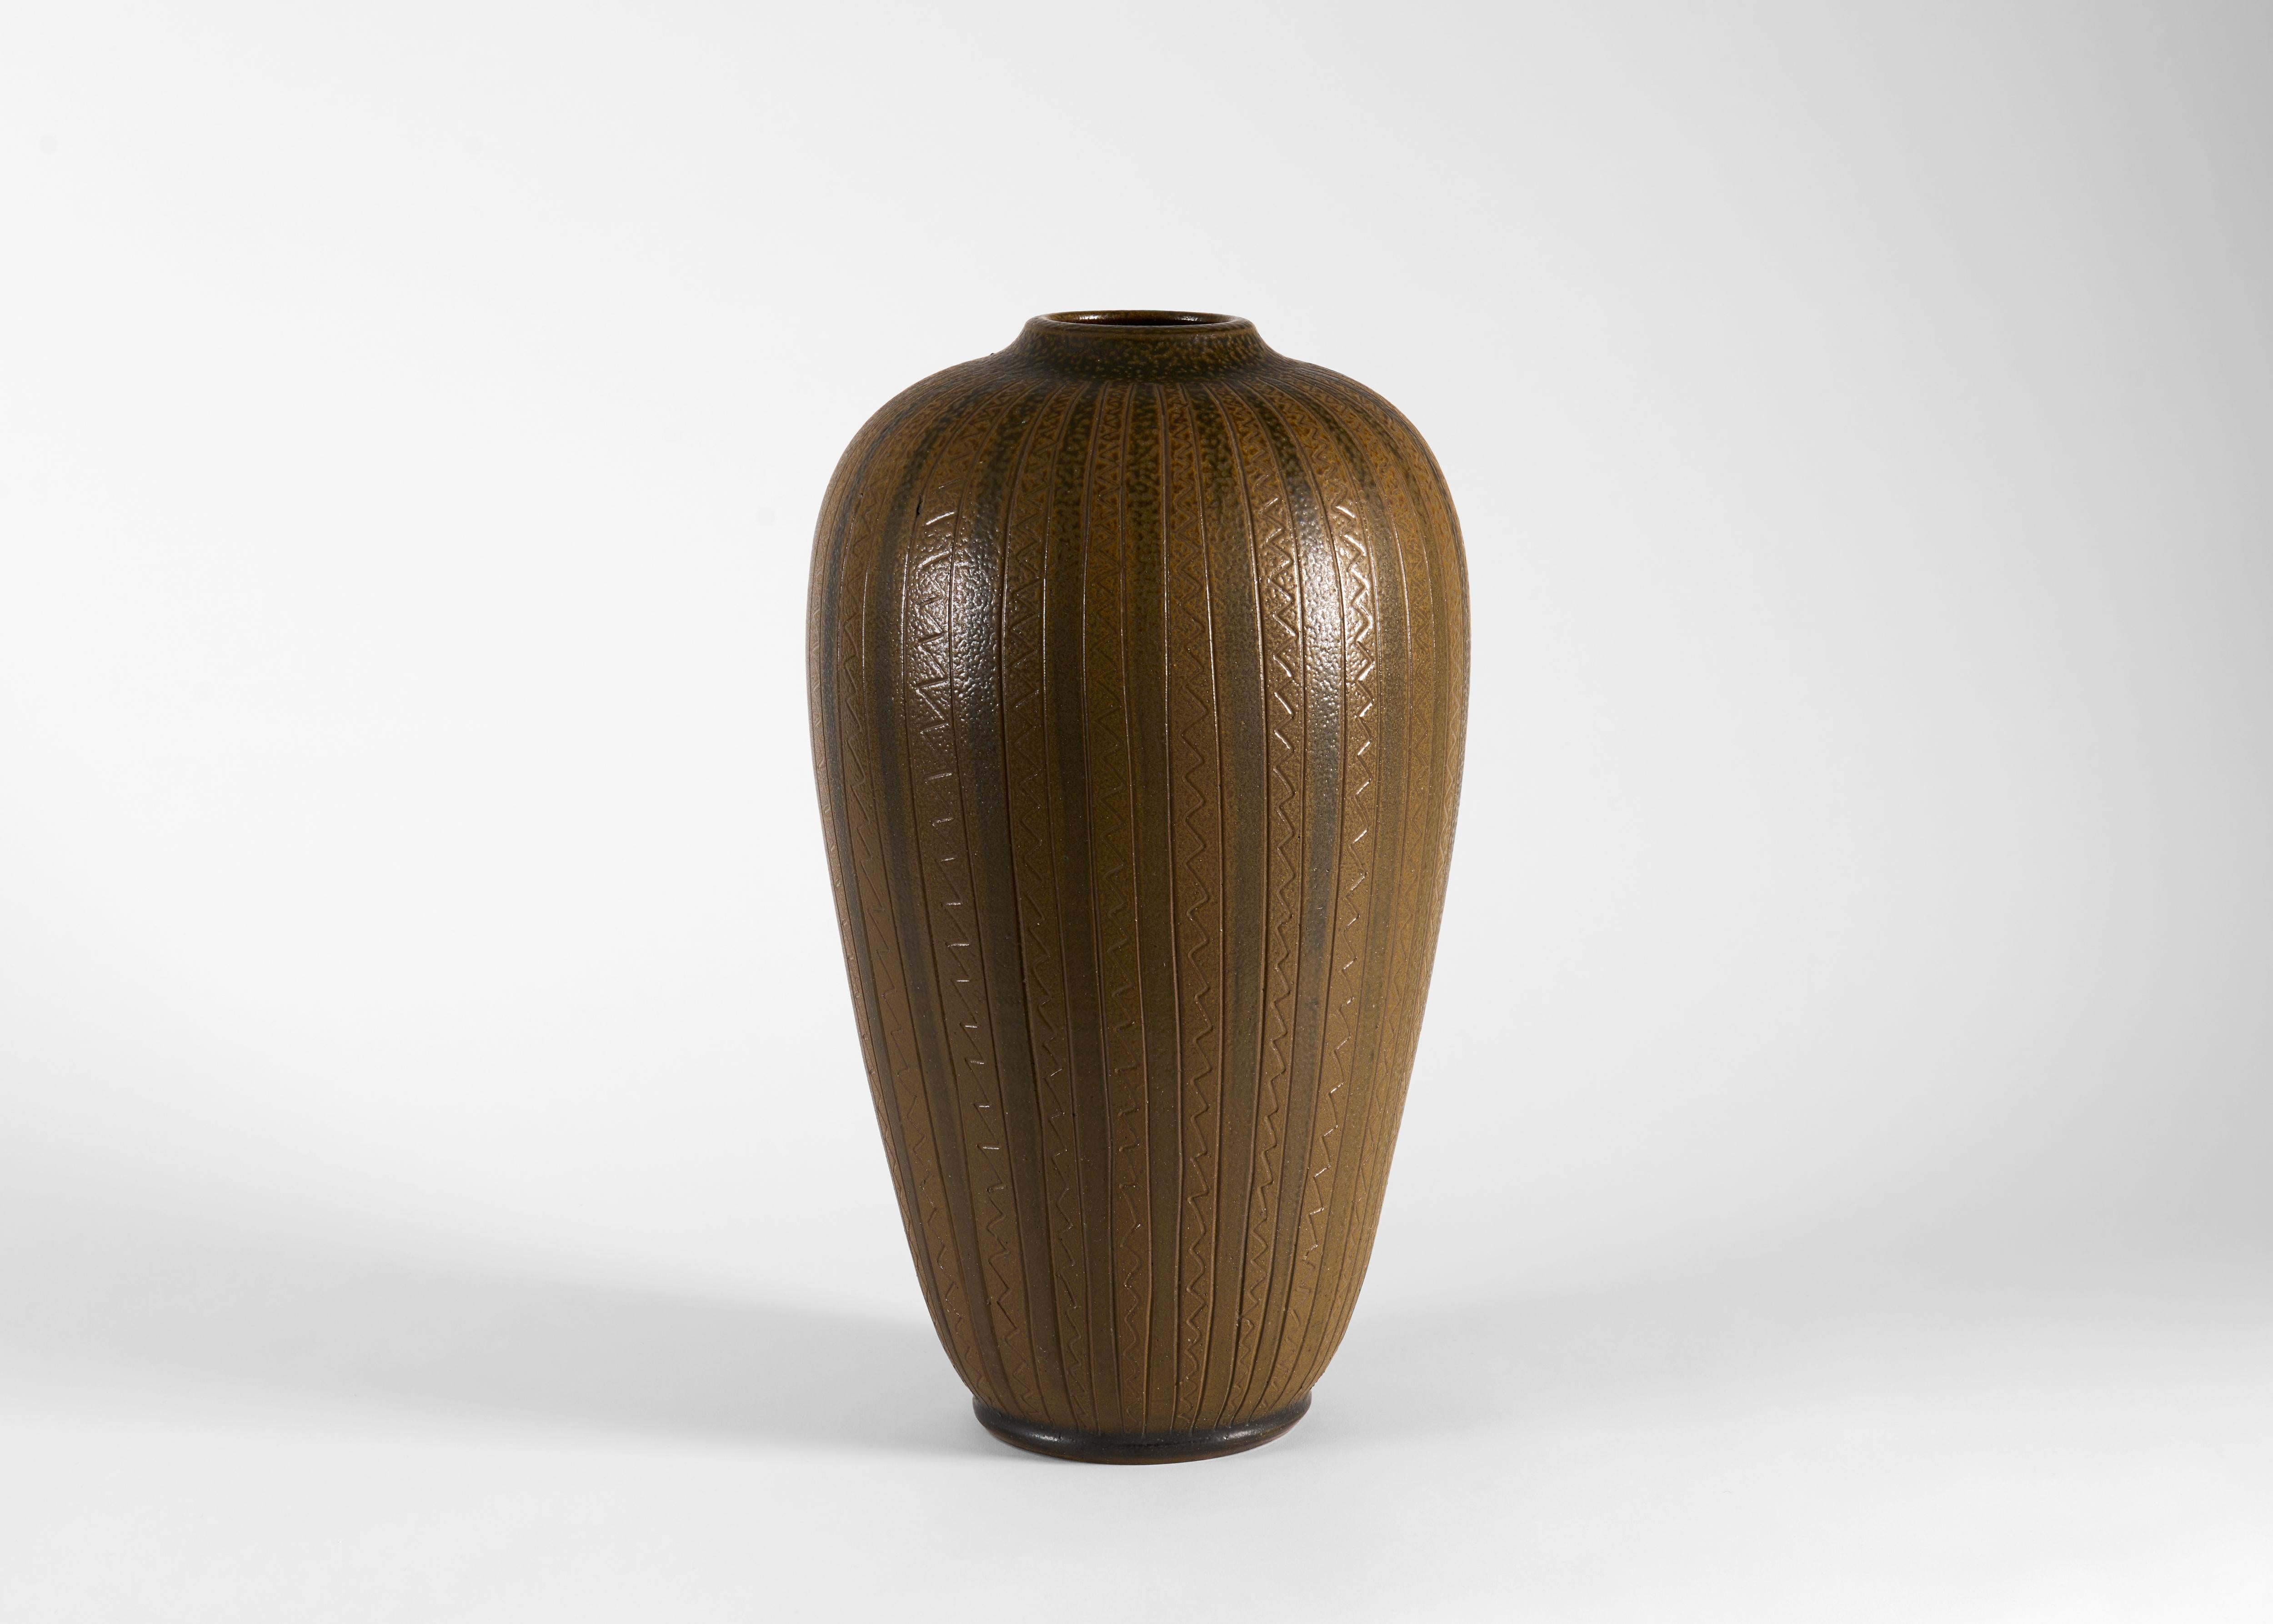 Vase en céramique émaillée de Walla°kra, fondée en 1864. Inscrit.